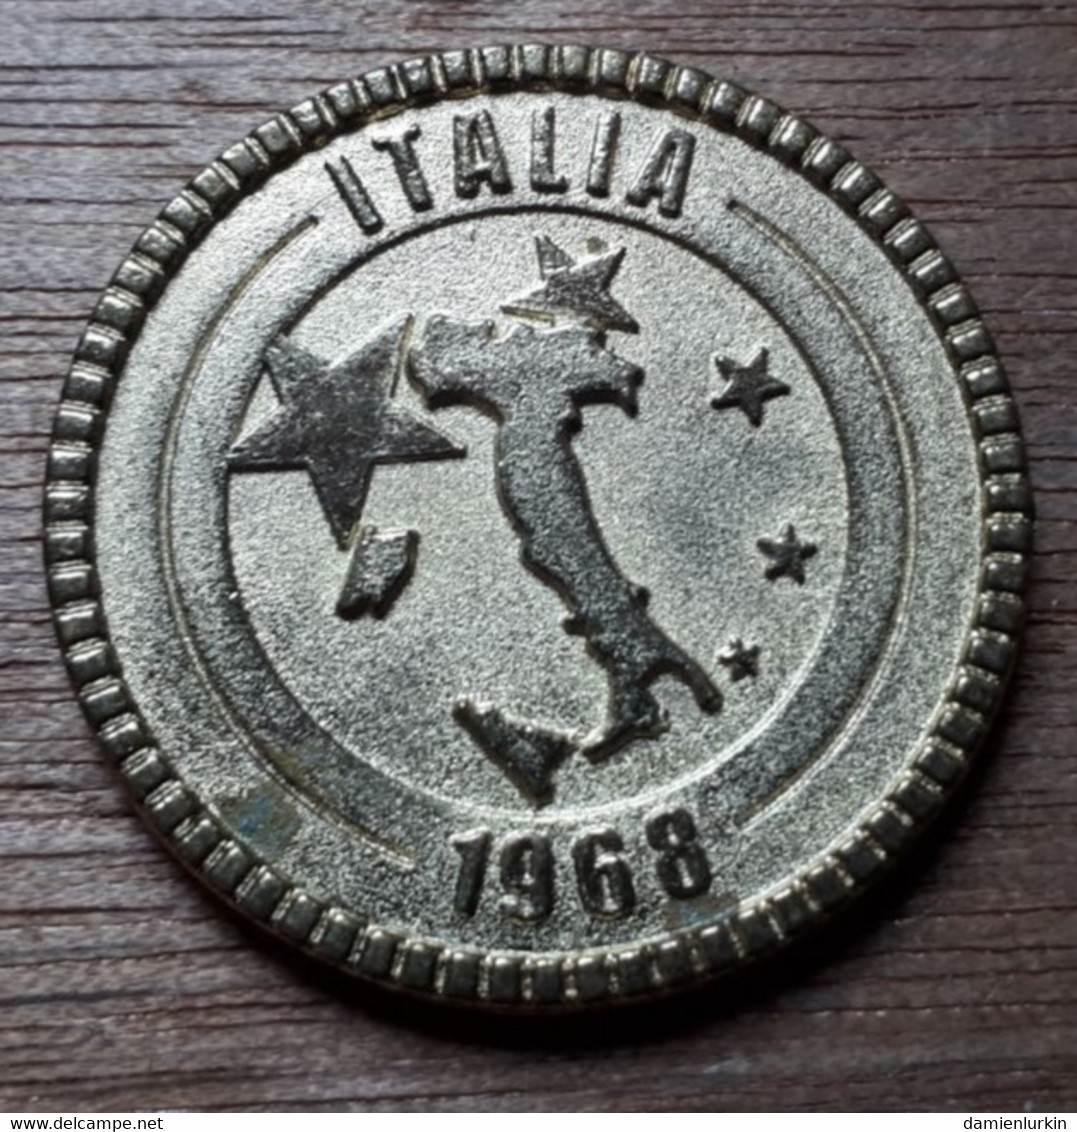 FRANCE MAGICGOAL2000 FOOTBALL ITALIE ITALY ITALIA 1968 - Professionals/Firms